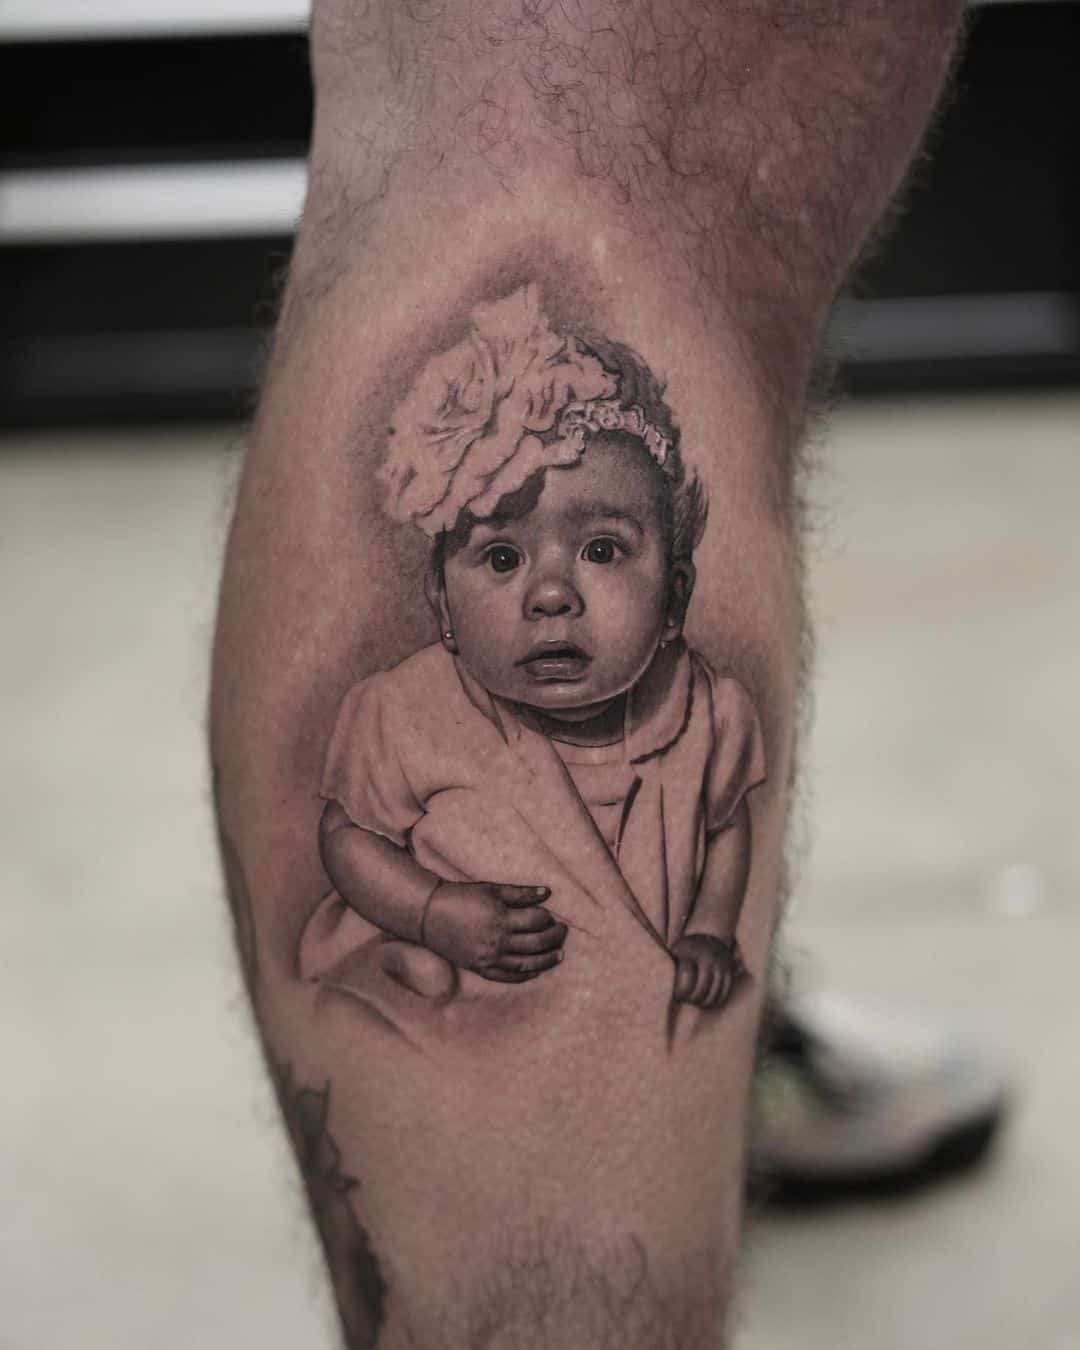 Baby portrait tattoo on leg by adamdeanart